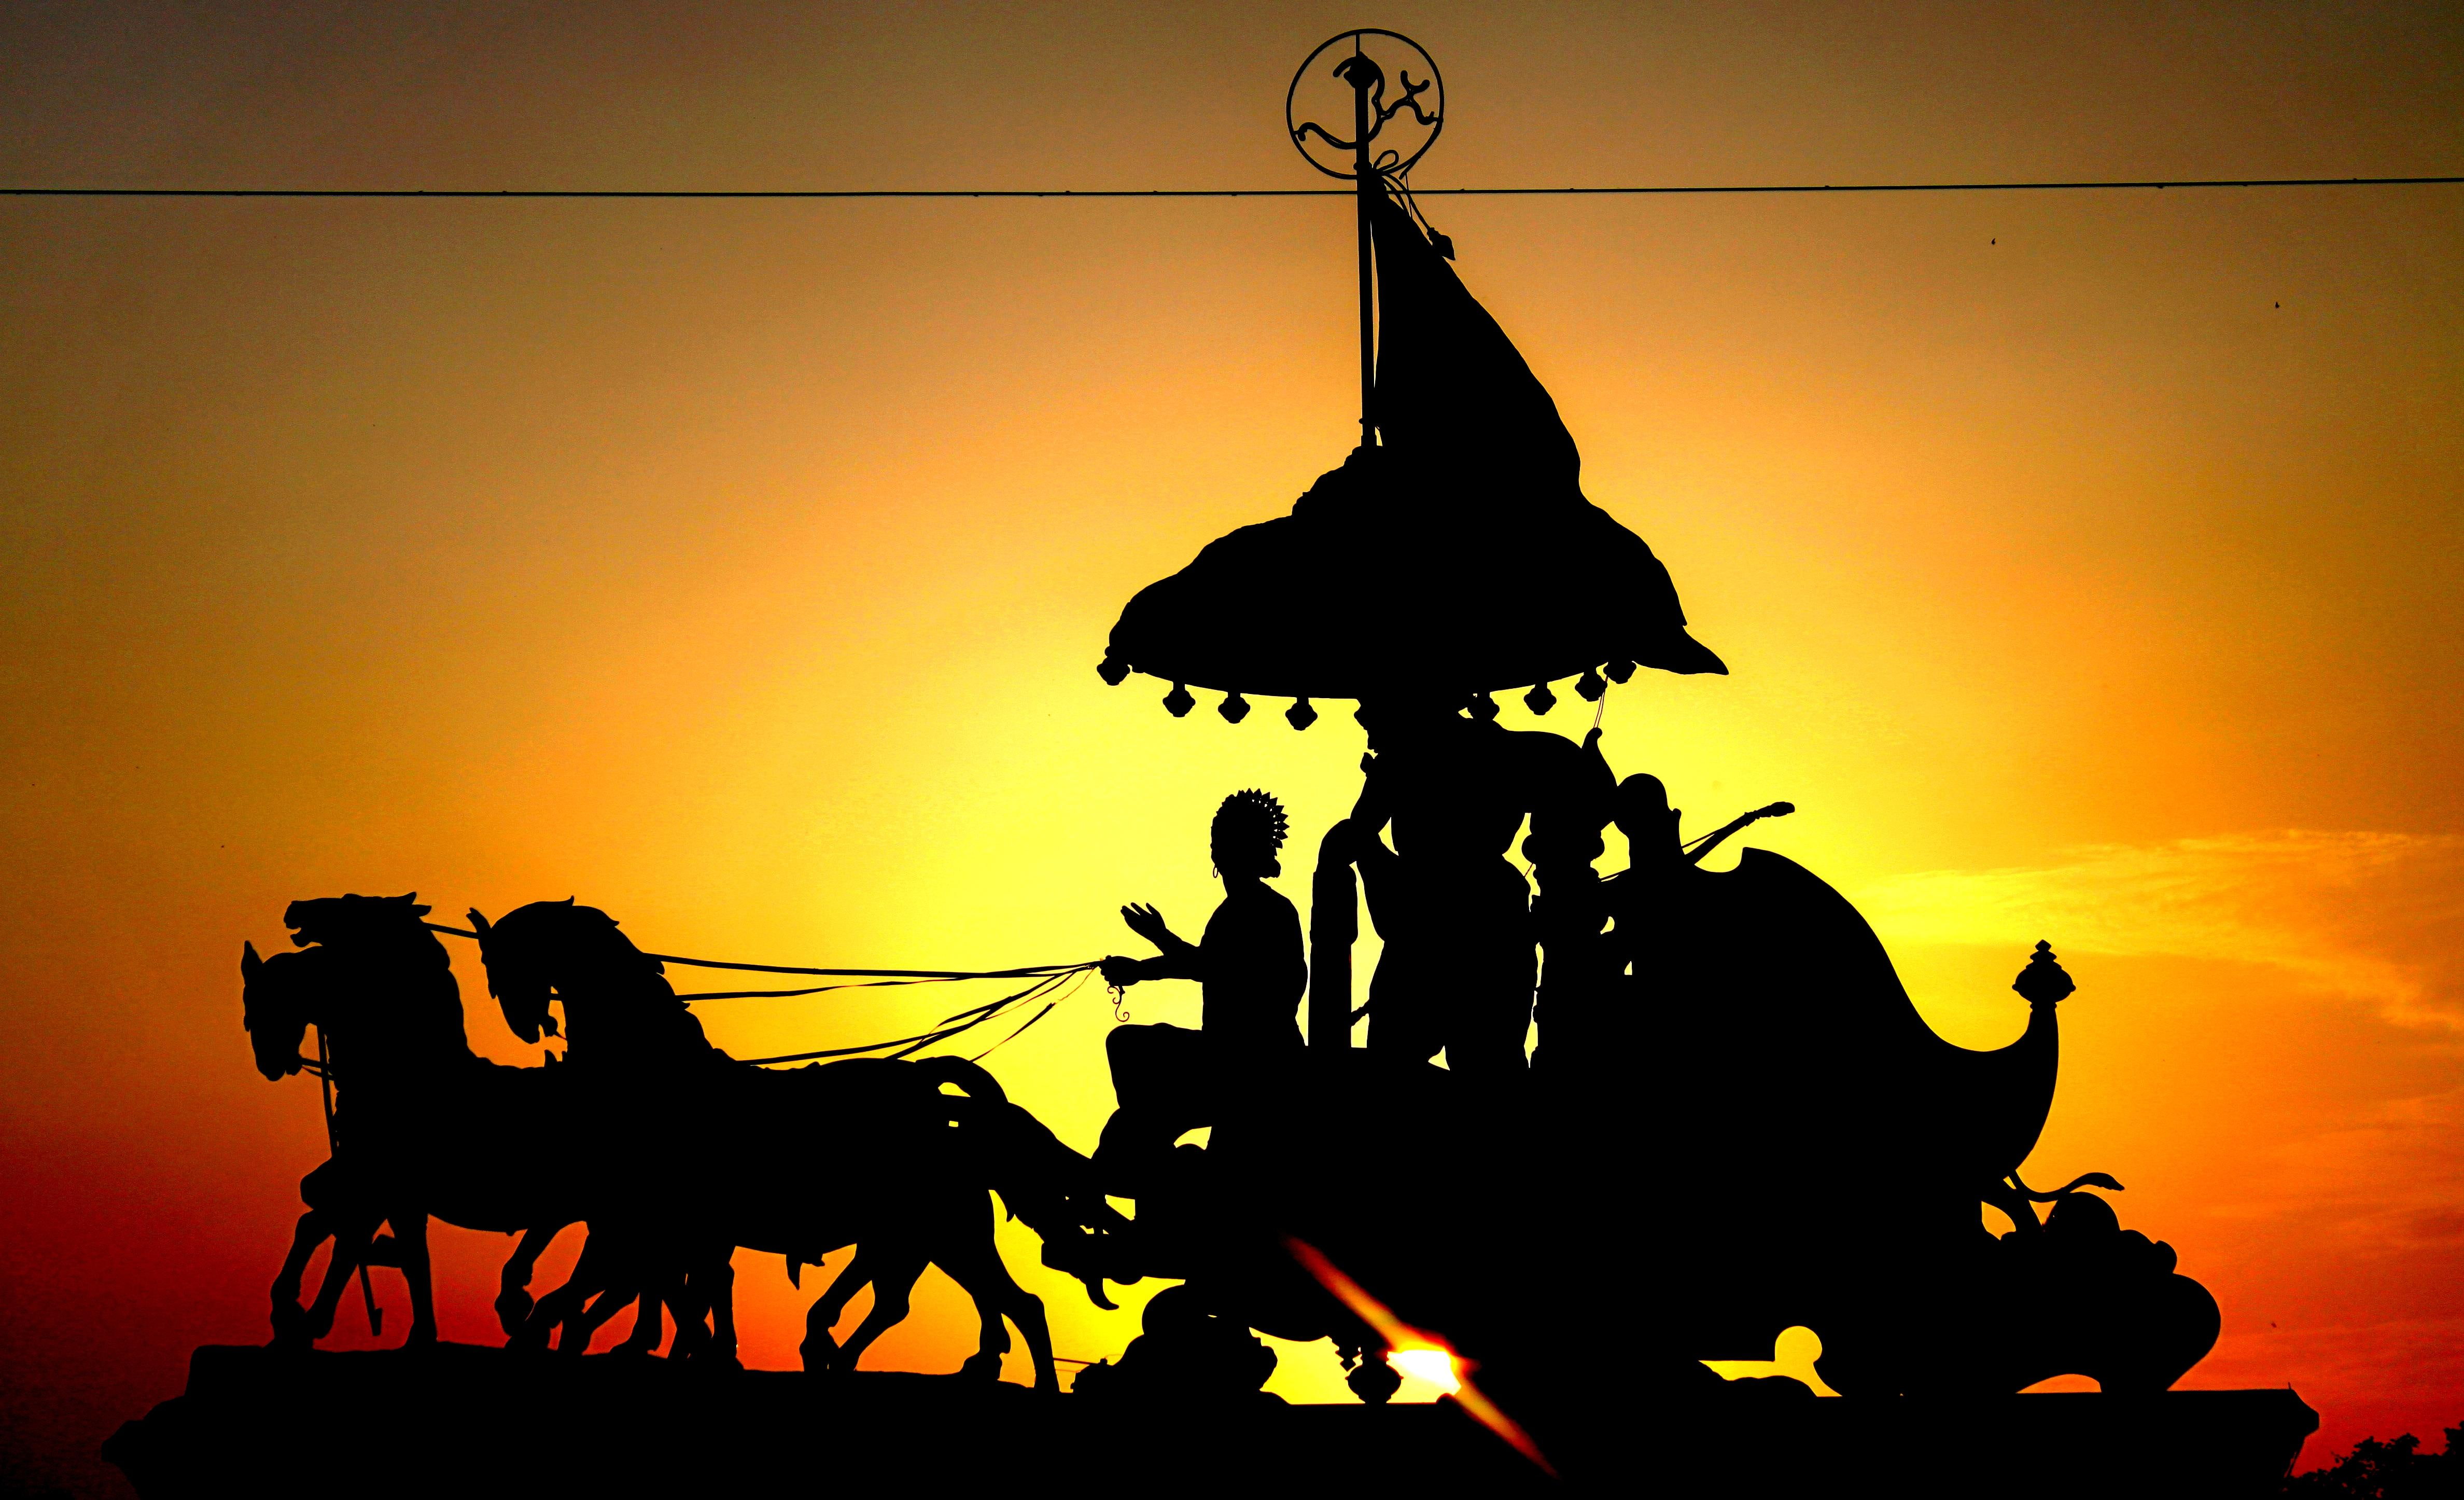 ARJUNA's CHARIOT( MAHABHARATA), horse carriage silhouette poster